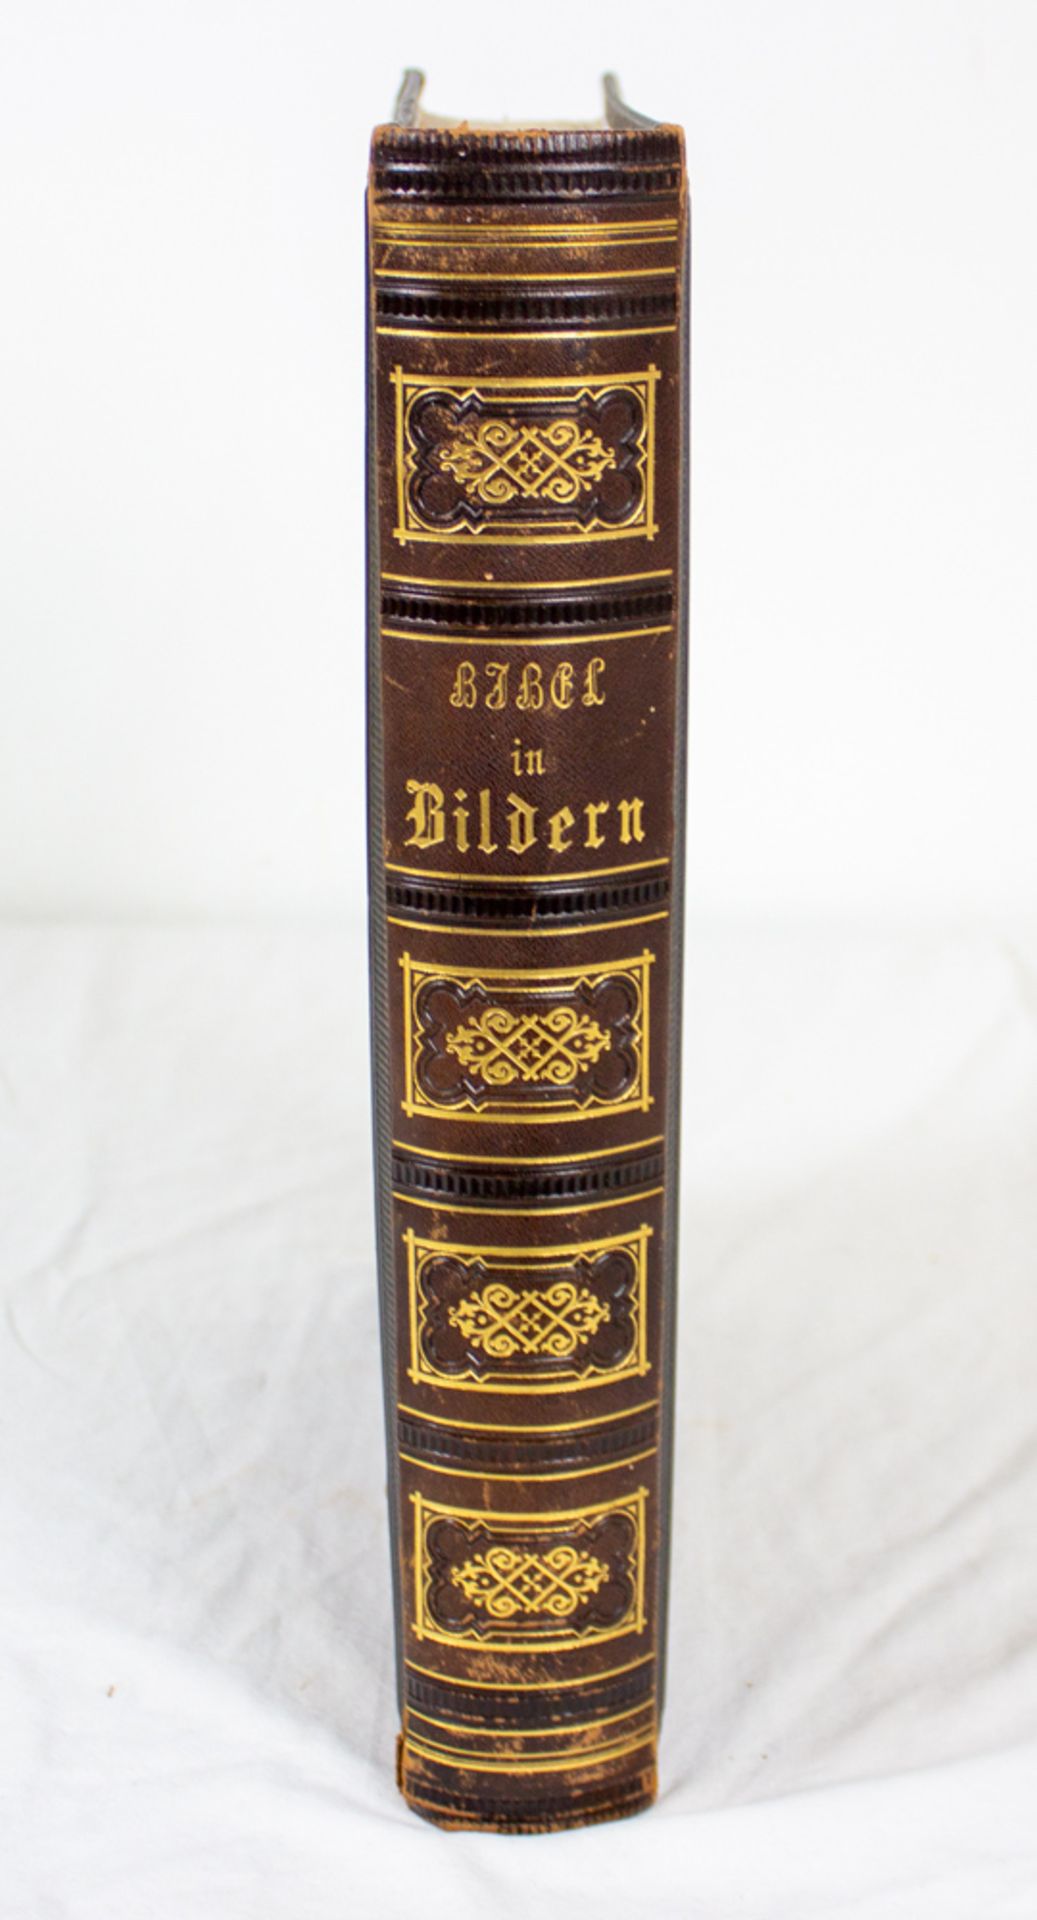 Schnorr's Bibel in Bildern, Volks- und Kinderbibel, Leipzig, 19. Jh. - Image 4 of 6